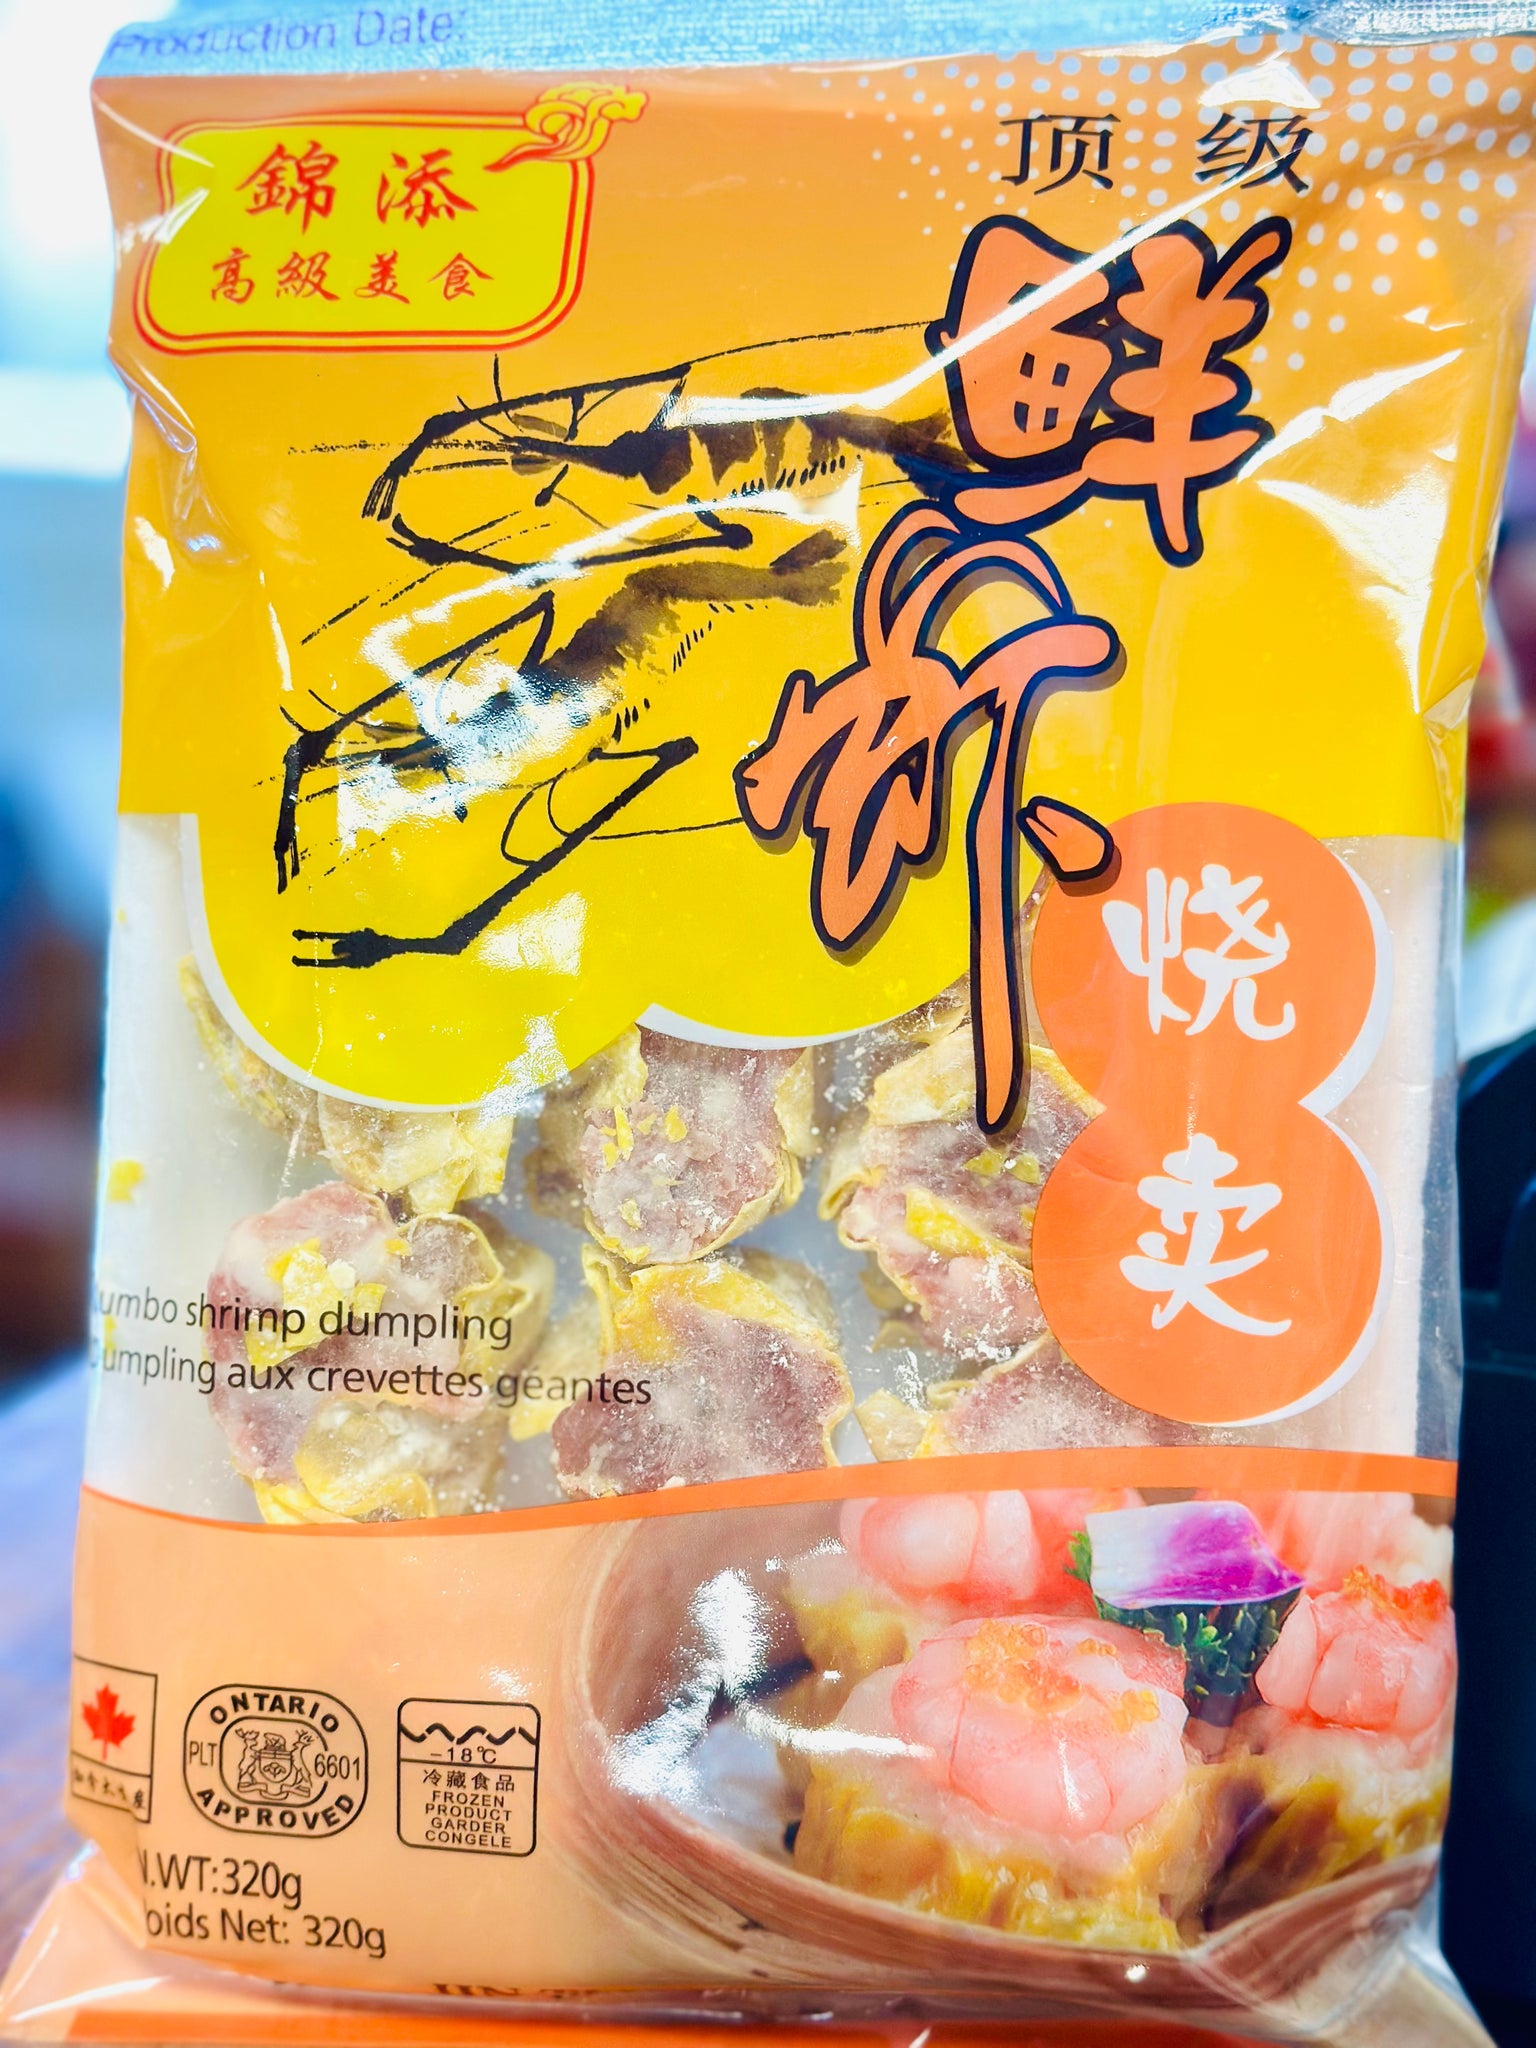 锦添鲜虾烧麦 jumbo shrimp dumpling